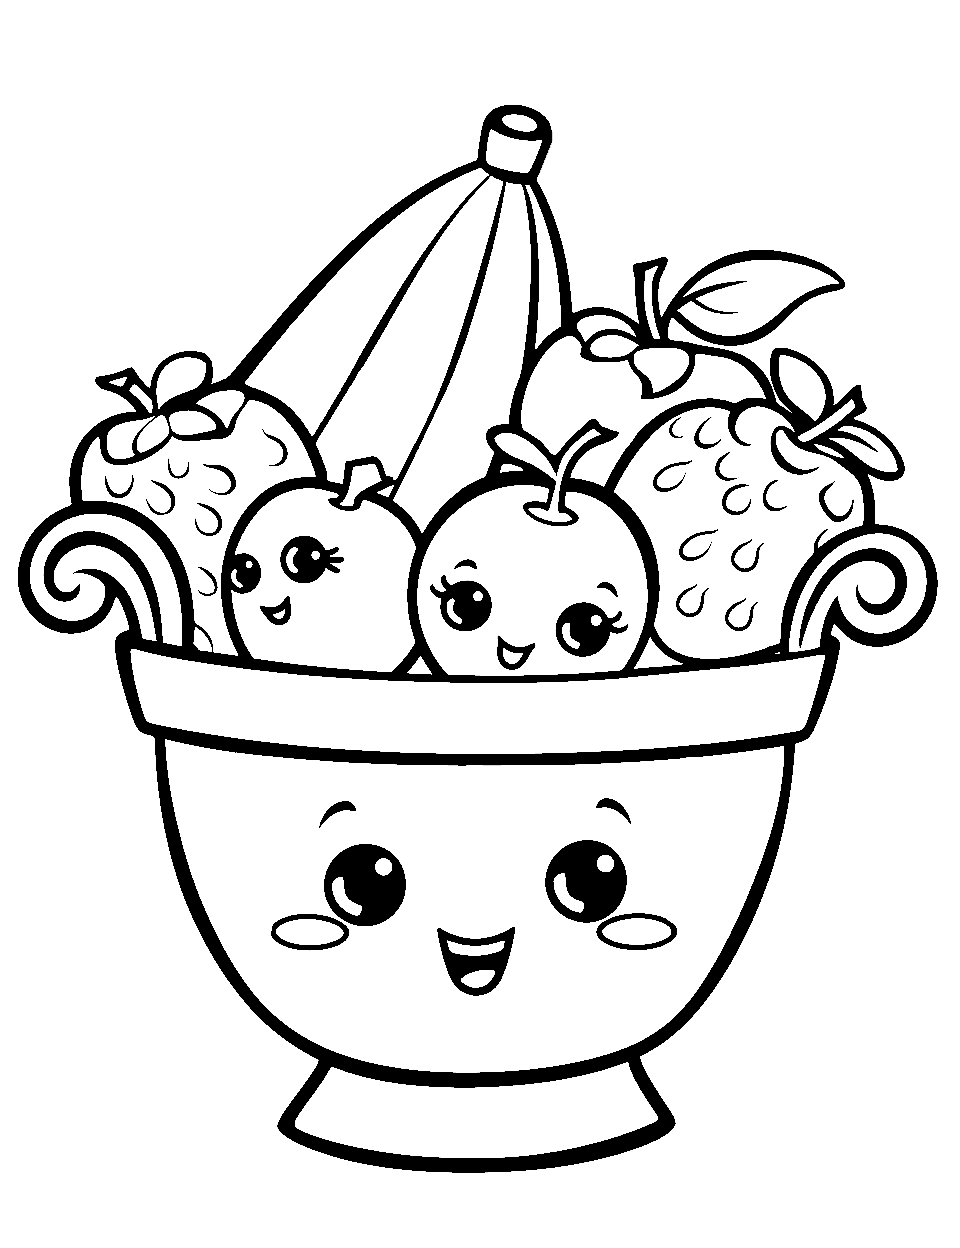 Kawaii Fruit Basket Coloring Page - A basket filled with kawaii-style fruits.